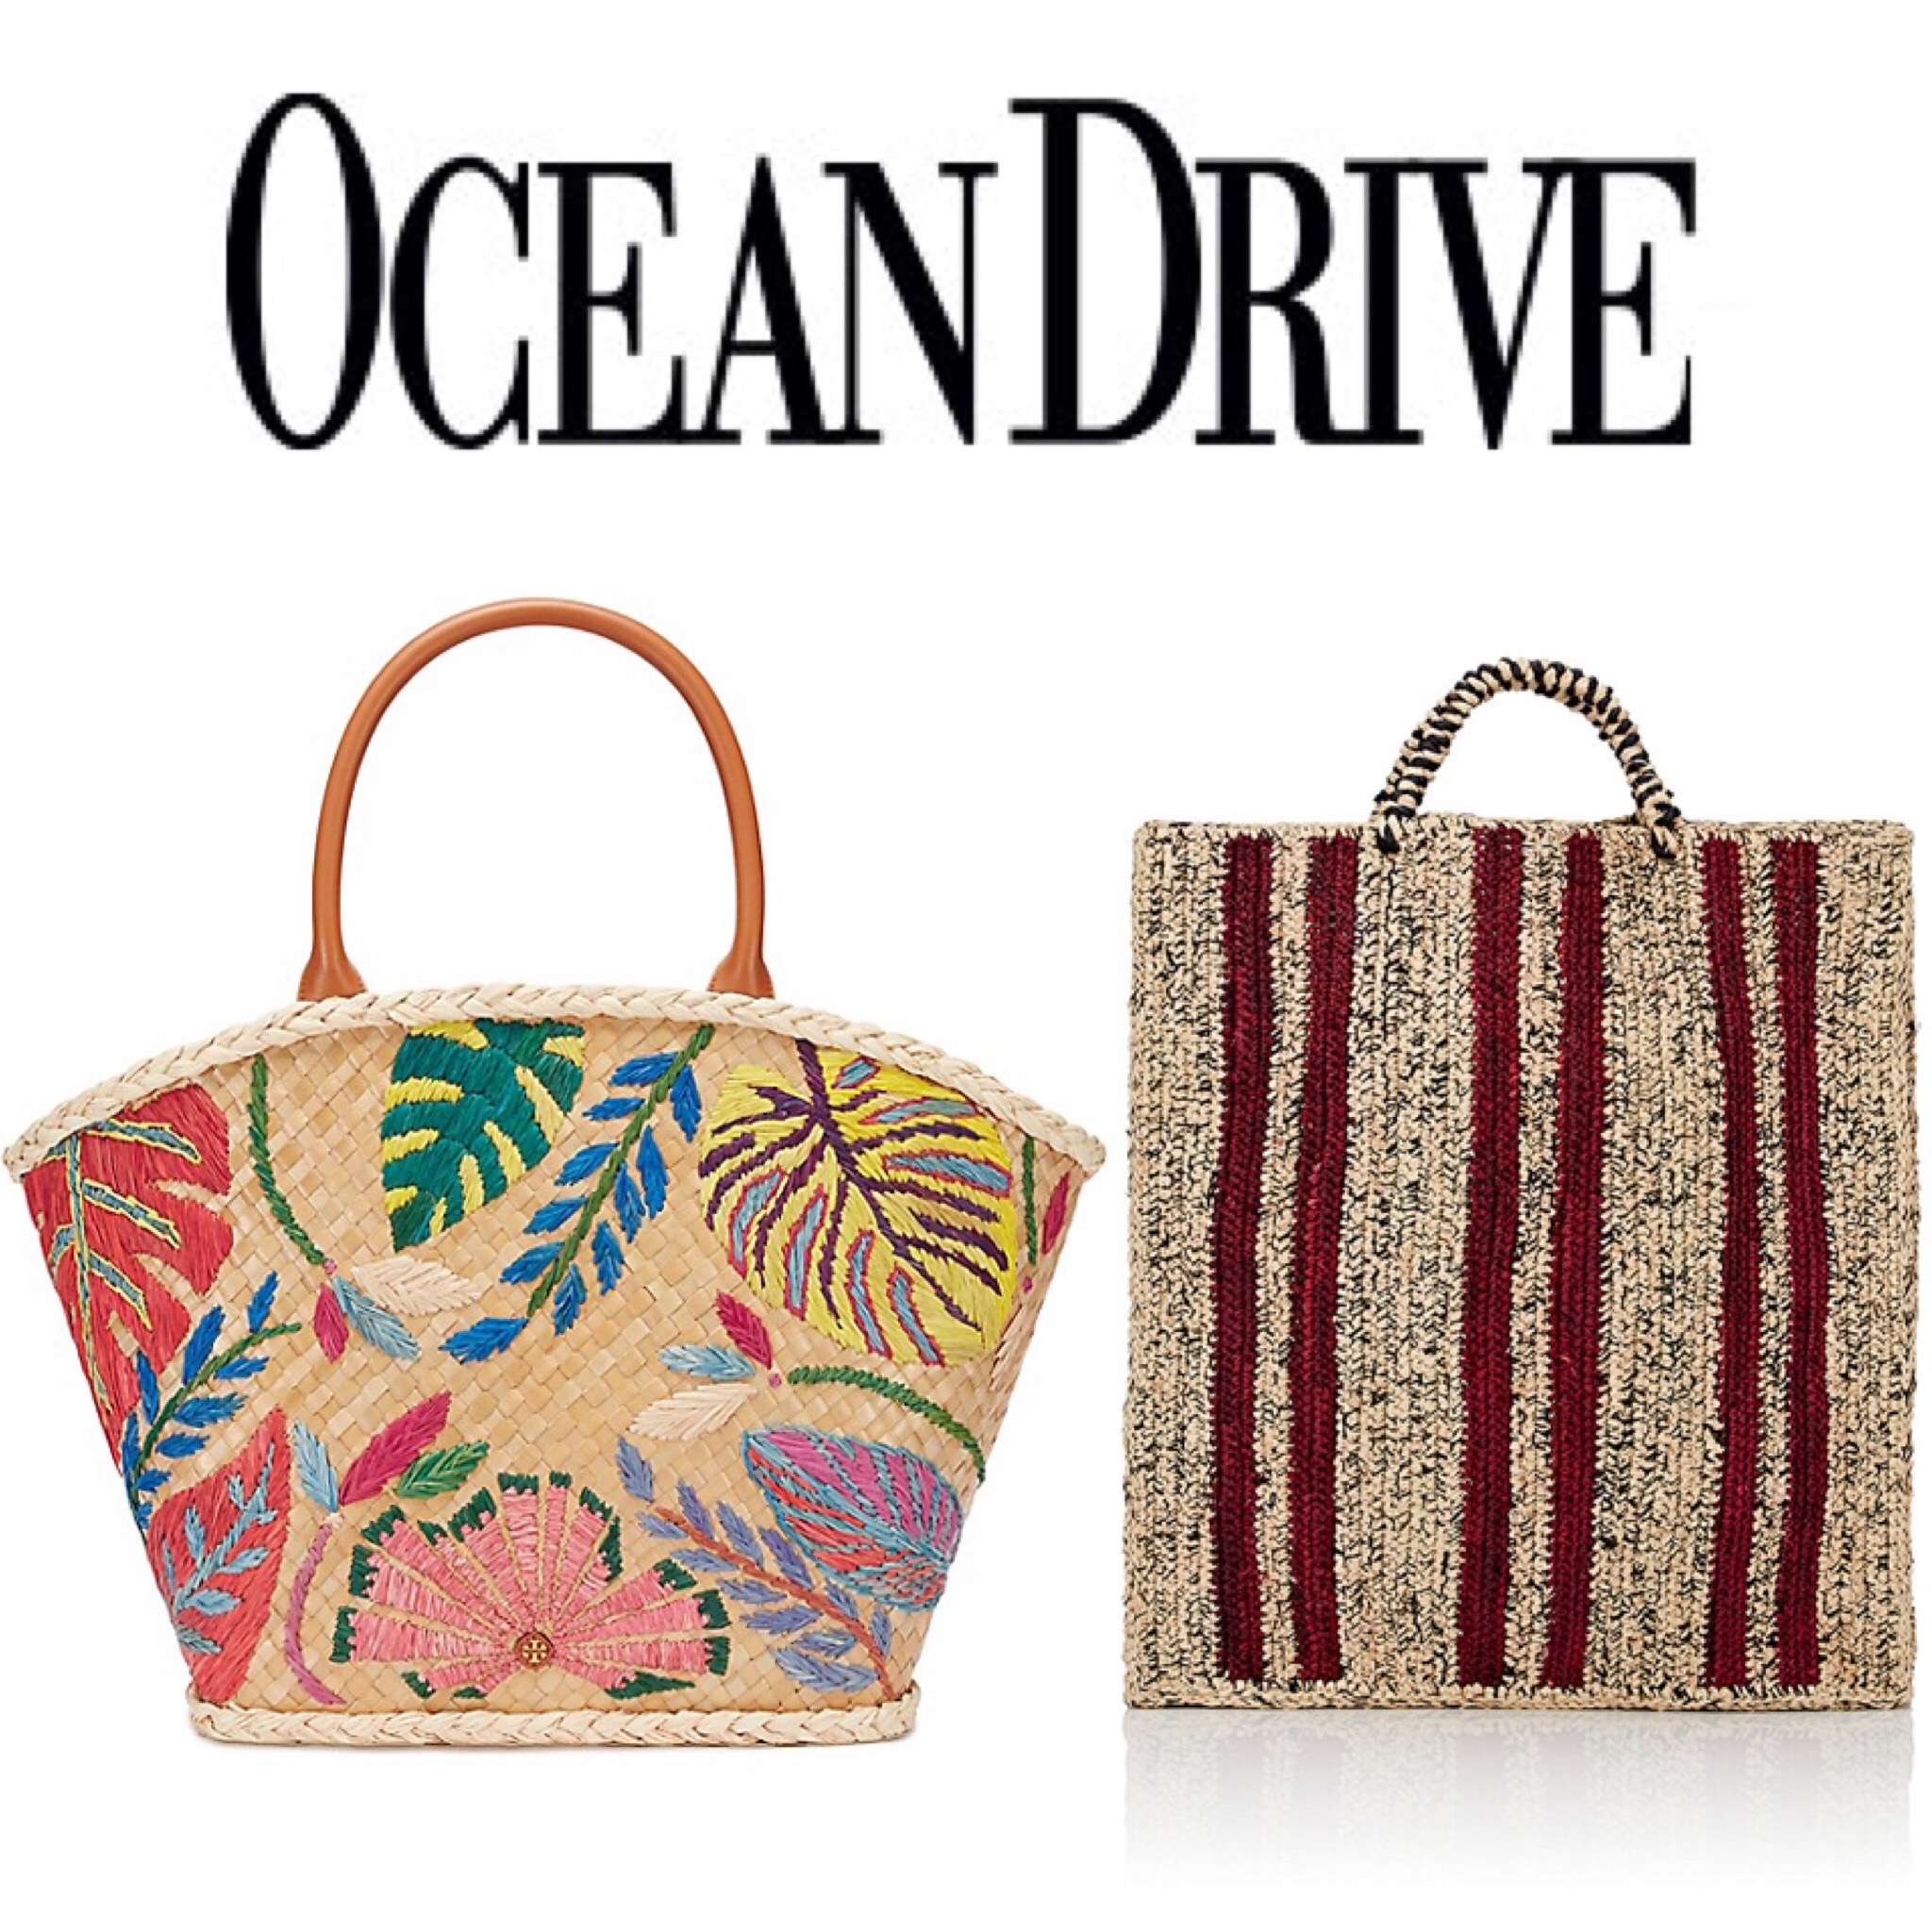  https://oceandrive.com/best-beach-bags-to-carry-this-summer 